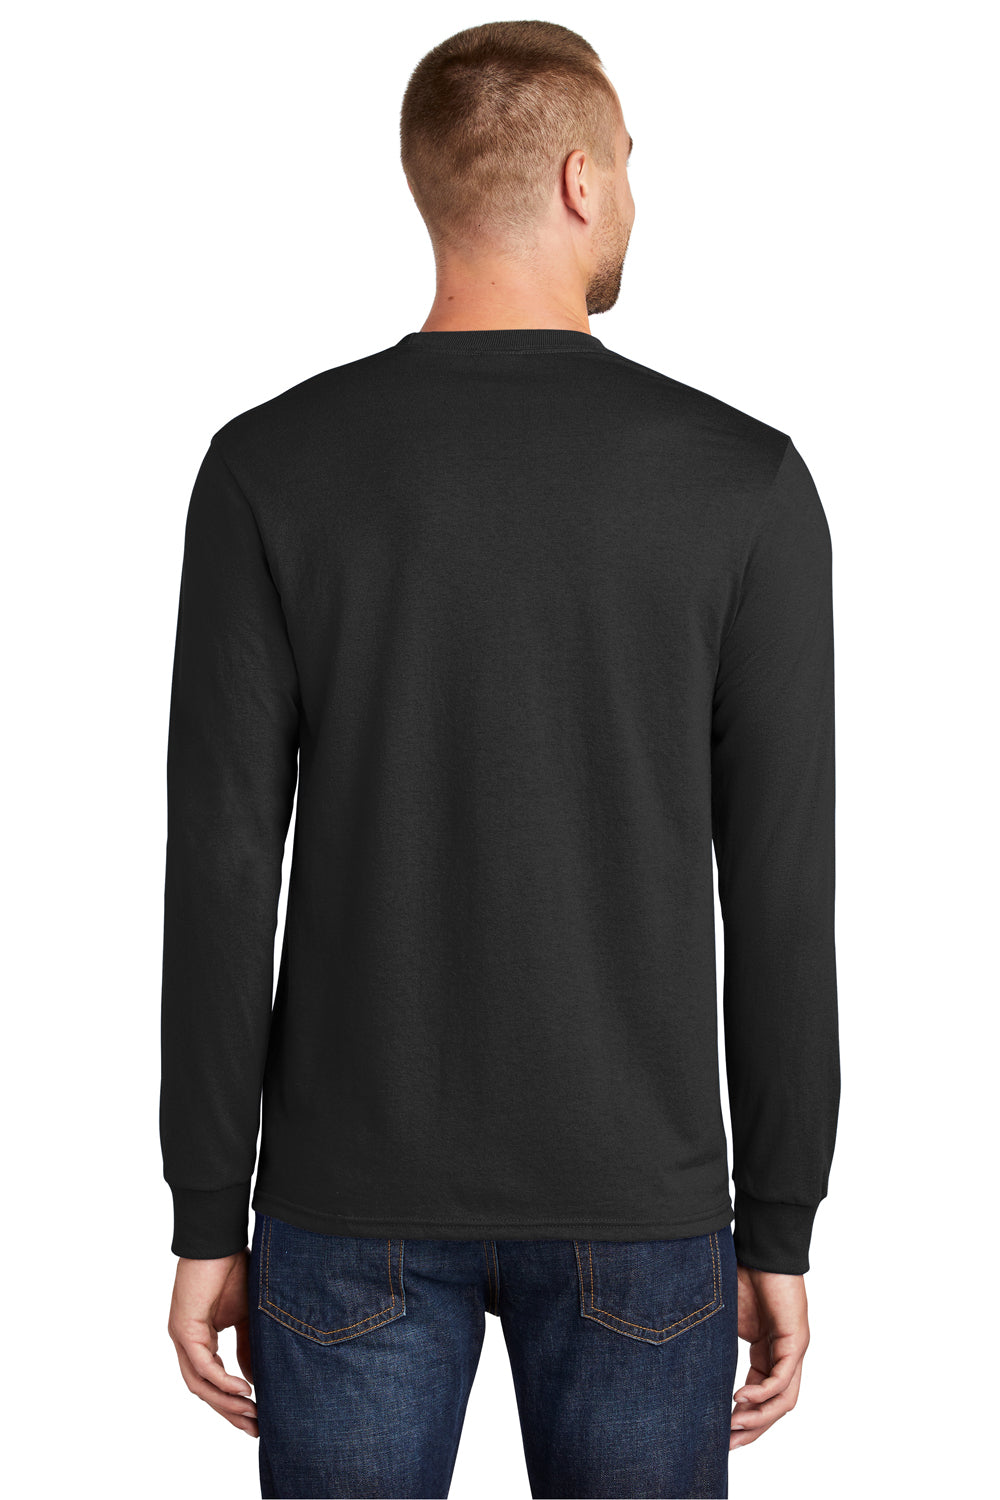 Port & Company PC55LS Mens Core Long Sleeve Crewneck T-Shirt Black Back